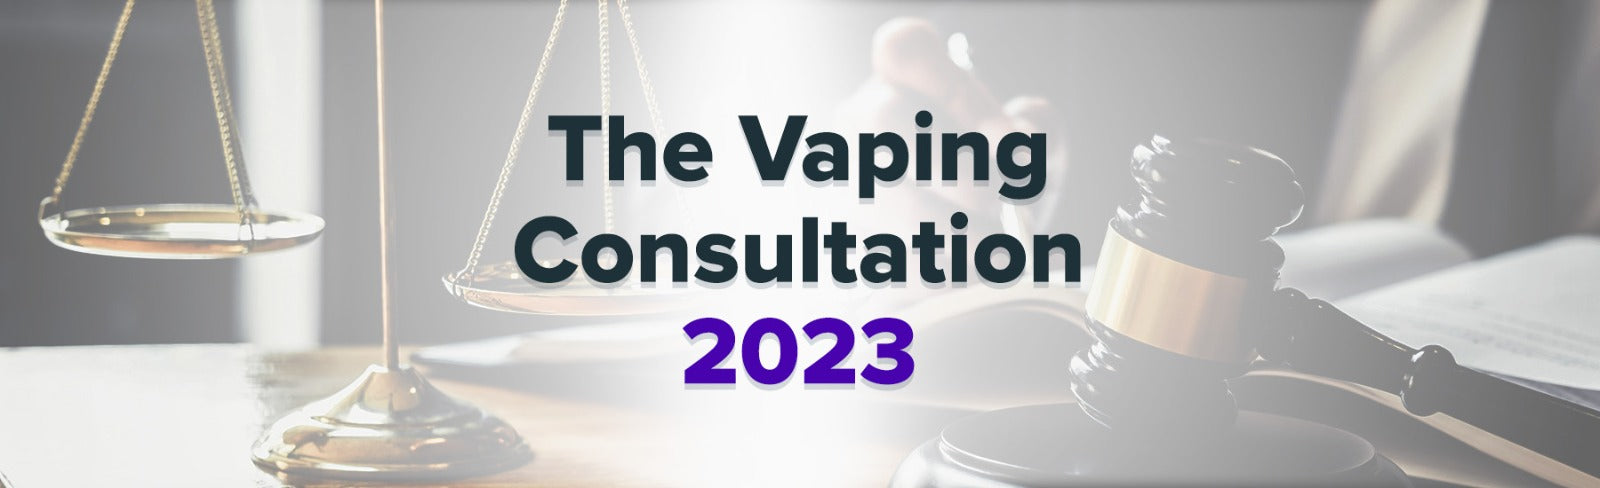 Vaping Consultation 2023